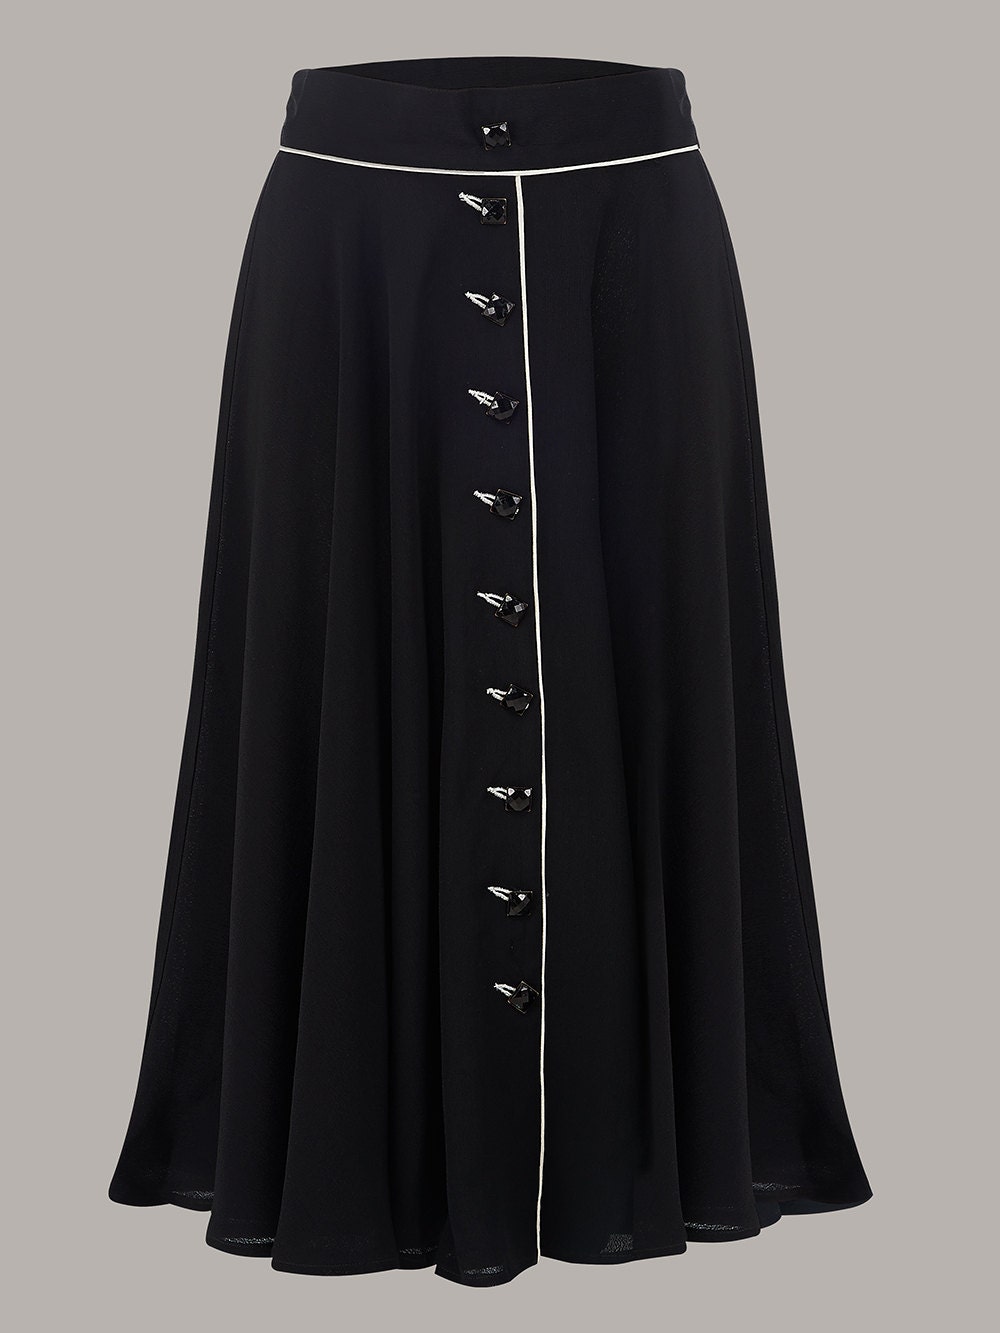 Rita Skirt in Black by the Seamstress of Bloomsbury | Etsy UK